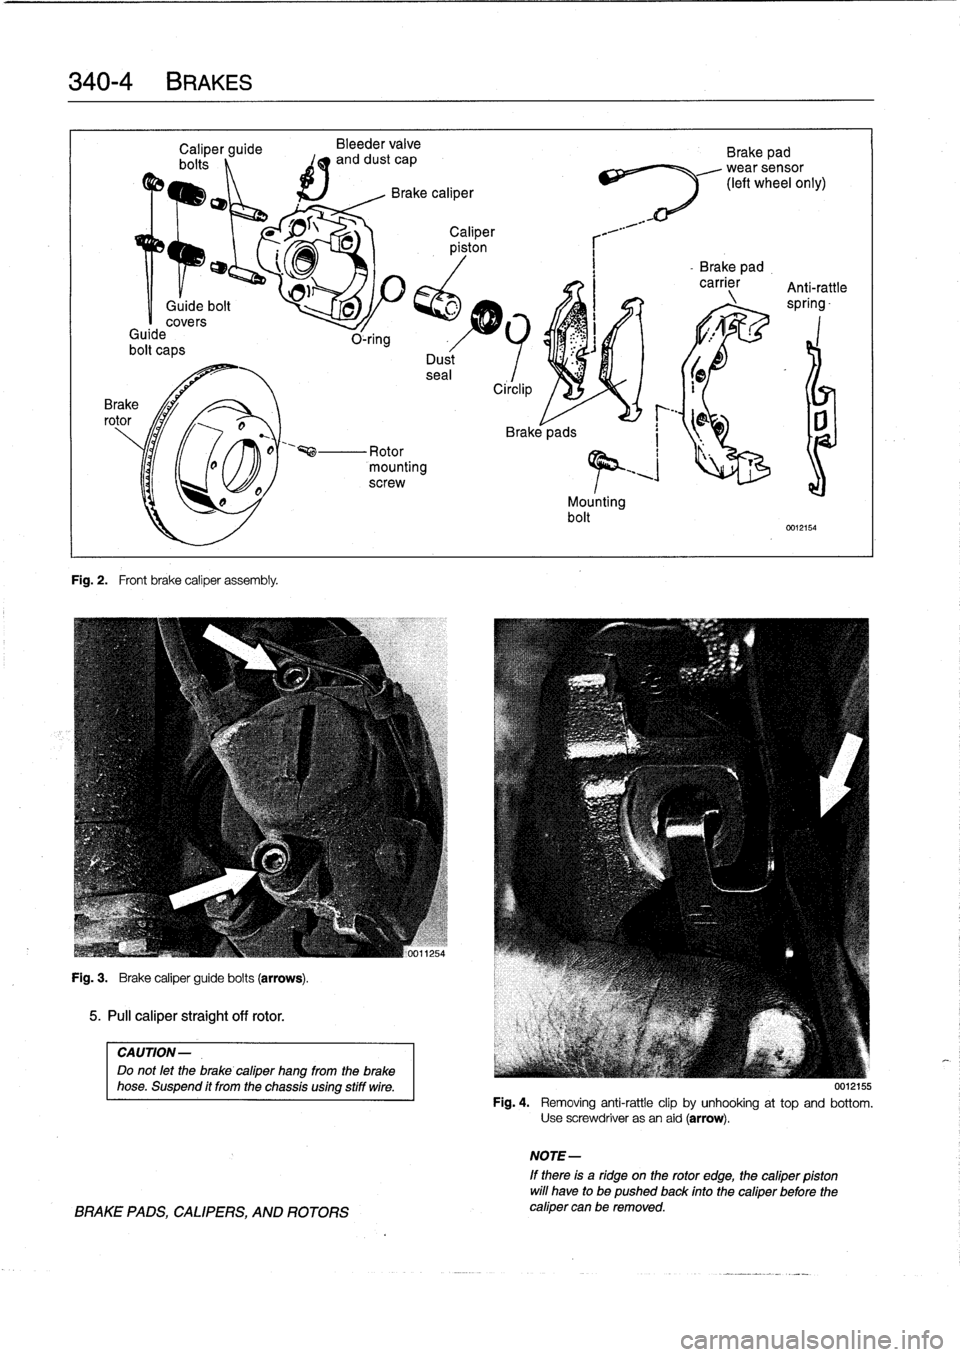 BMW M3 1996 E36 Workshop Manual 
340-
4
BRAKES

Fig
.
2
.

	

Front
brake
caliper
assembly
.

Bleeder
valve
and
dust
cap

Mounting
bolt

Brake
pad
wearsensor
(left
wheel
only)

-
Brake
pad
.
carrier
Anti-rattle
^_
spring-

0012154

